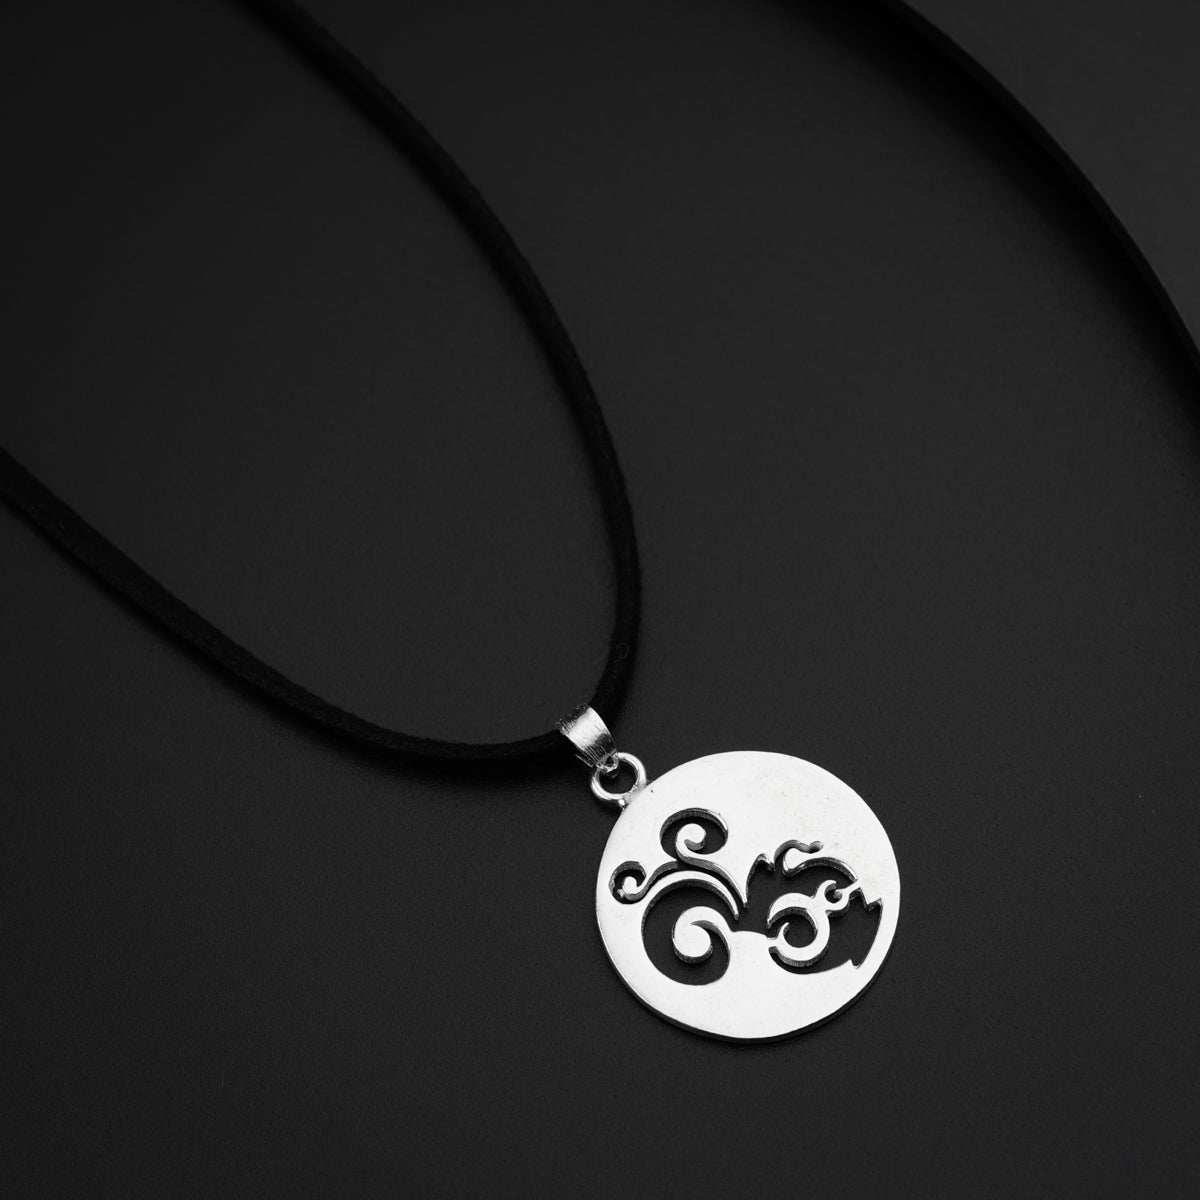 Aquarius / कुंभ Silver Pendant Necklace